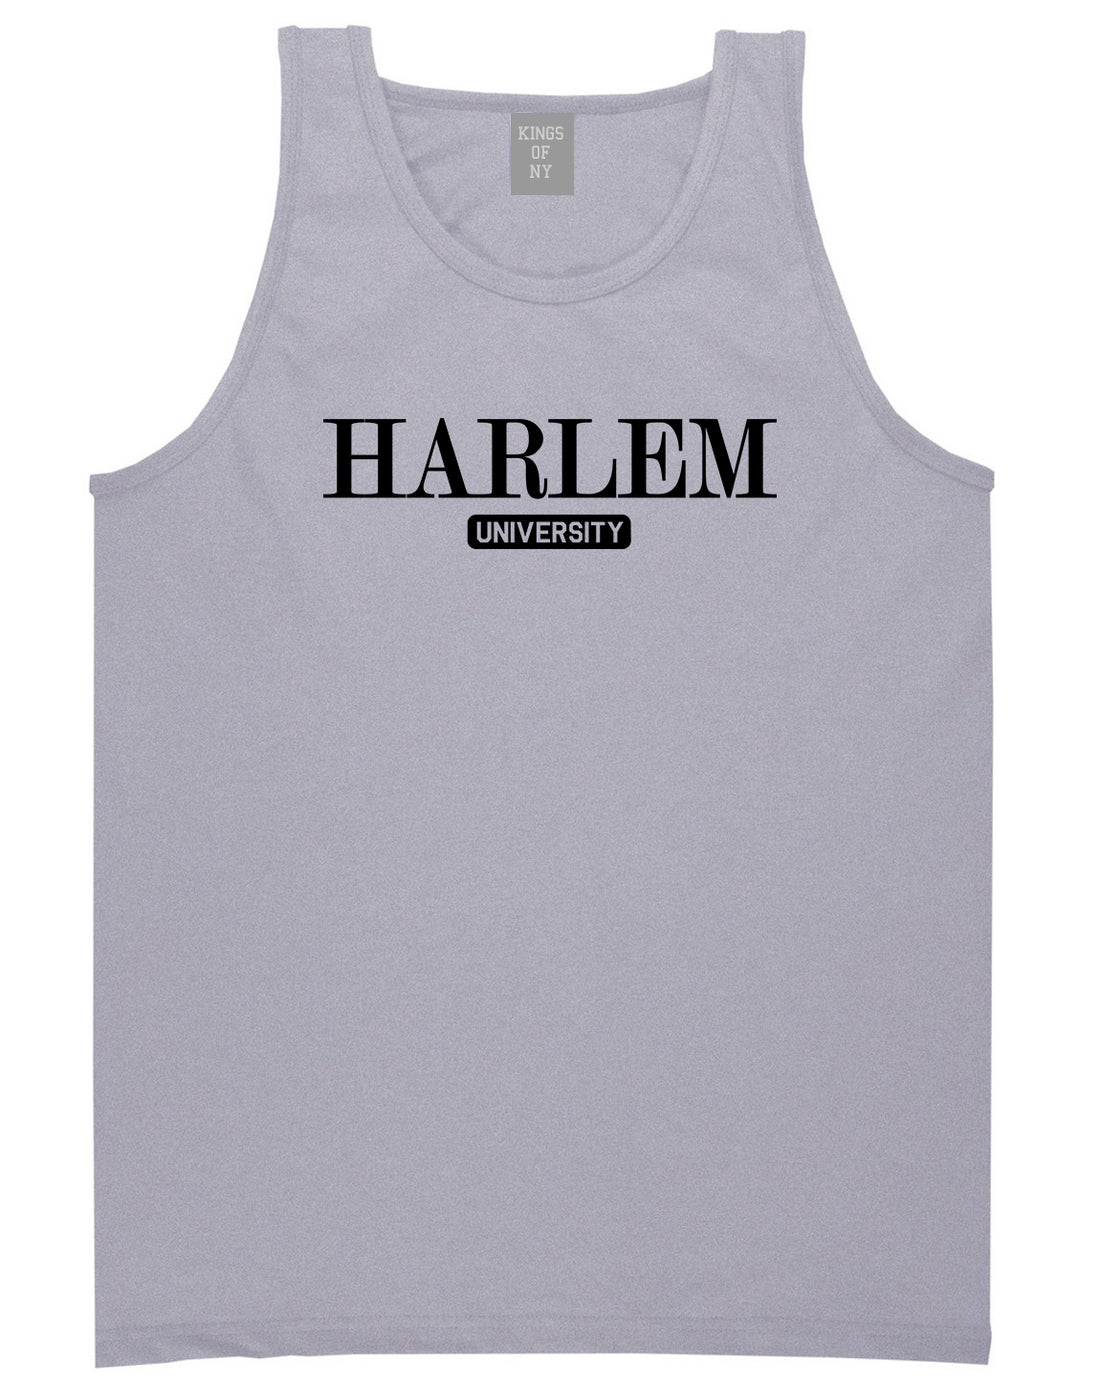 Harlem University New York Mens Tank Top T-Shirt Grey